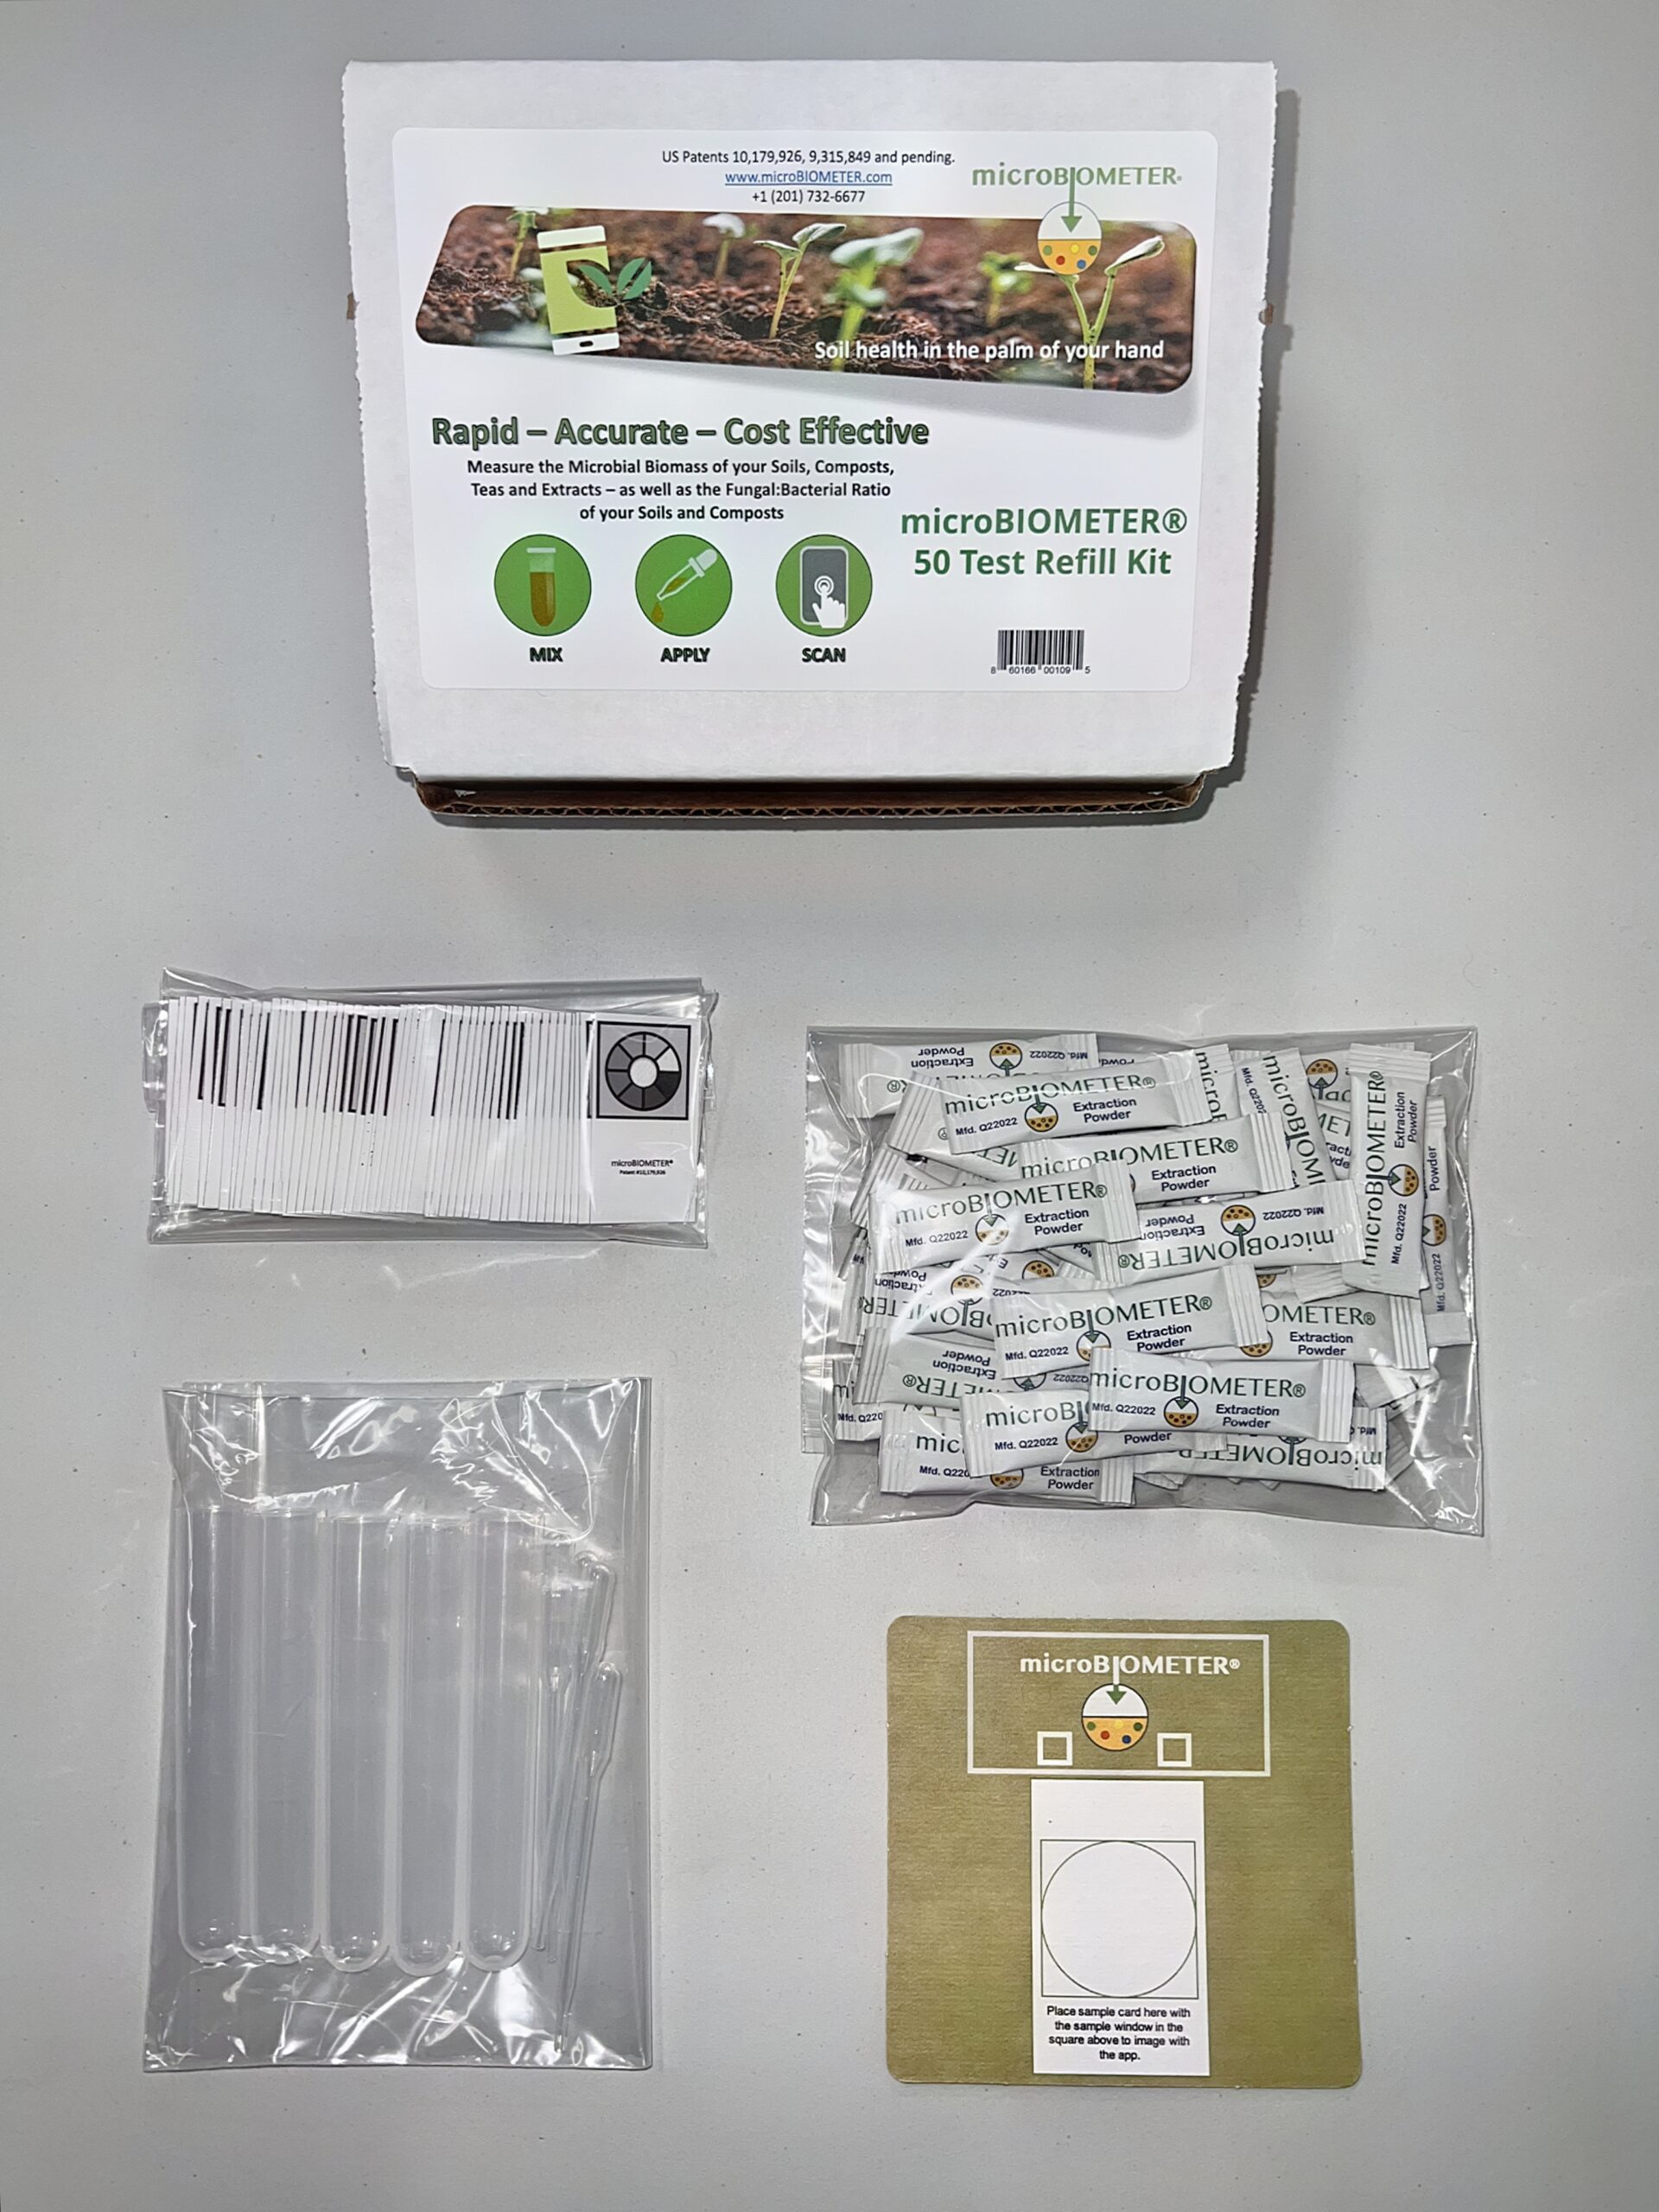 microBIOMETER® 50 Test Refill Kit USA - microBIOMETER